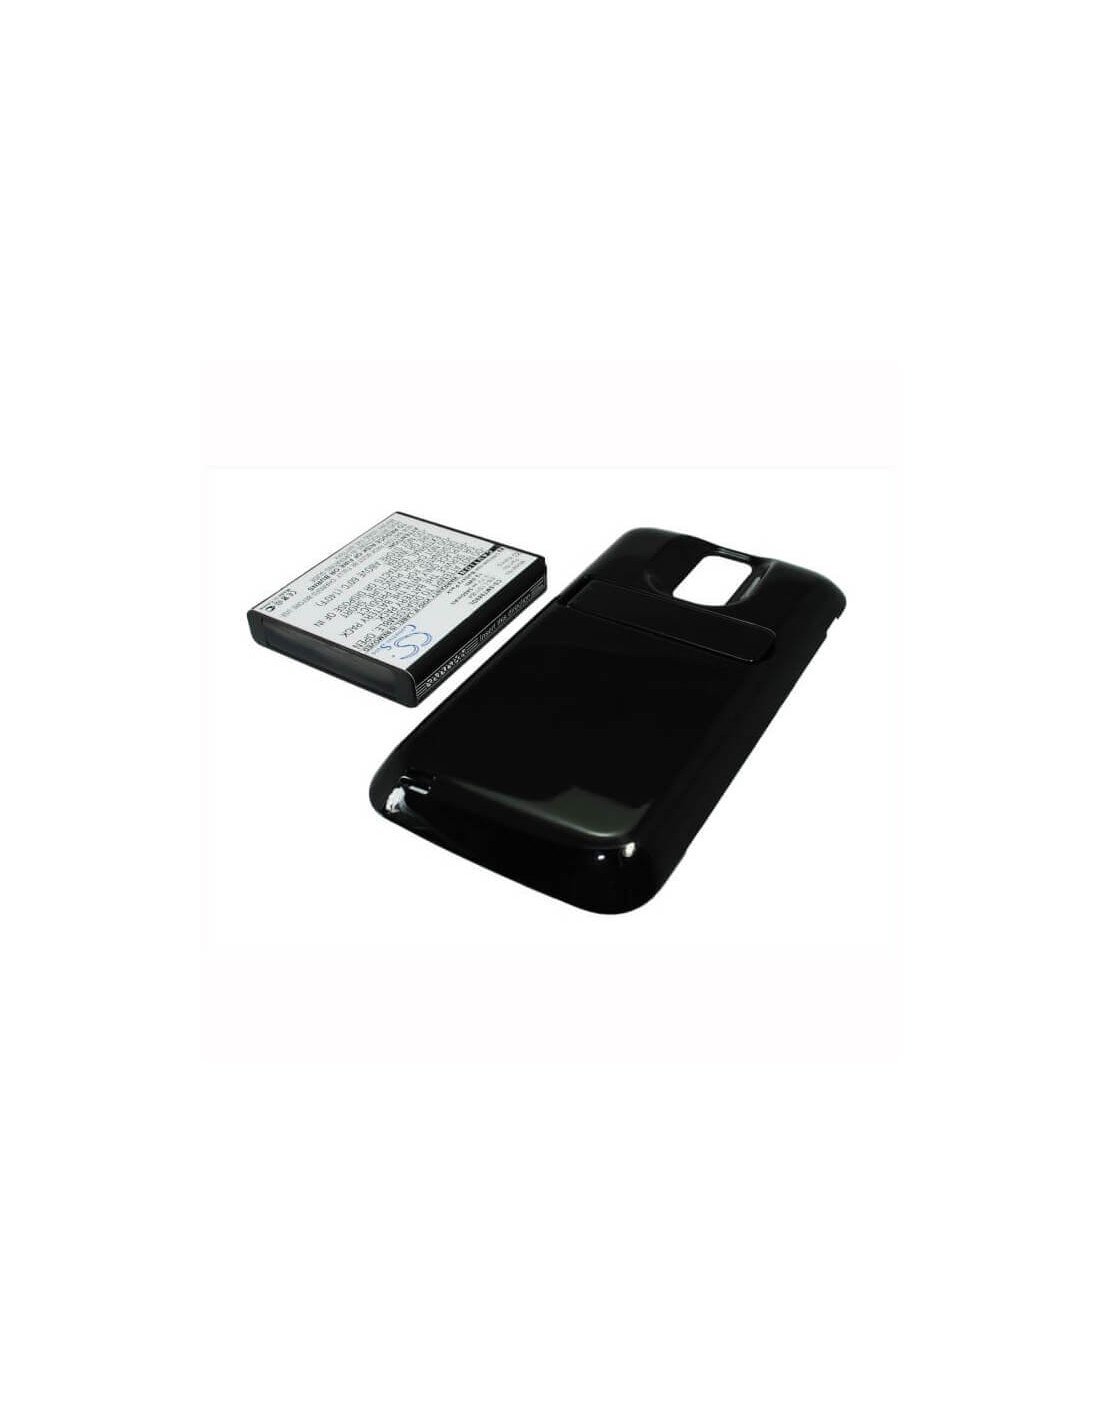 Battery for Samsung Galaxy S Hercules, SGH-T989, Galaxy S II X, Black cover 3.7V, 3400mAh - 12.58Wh